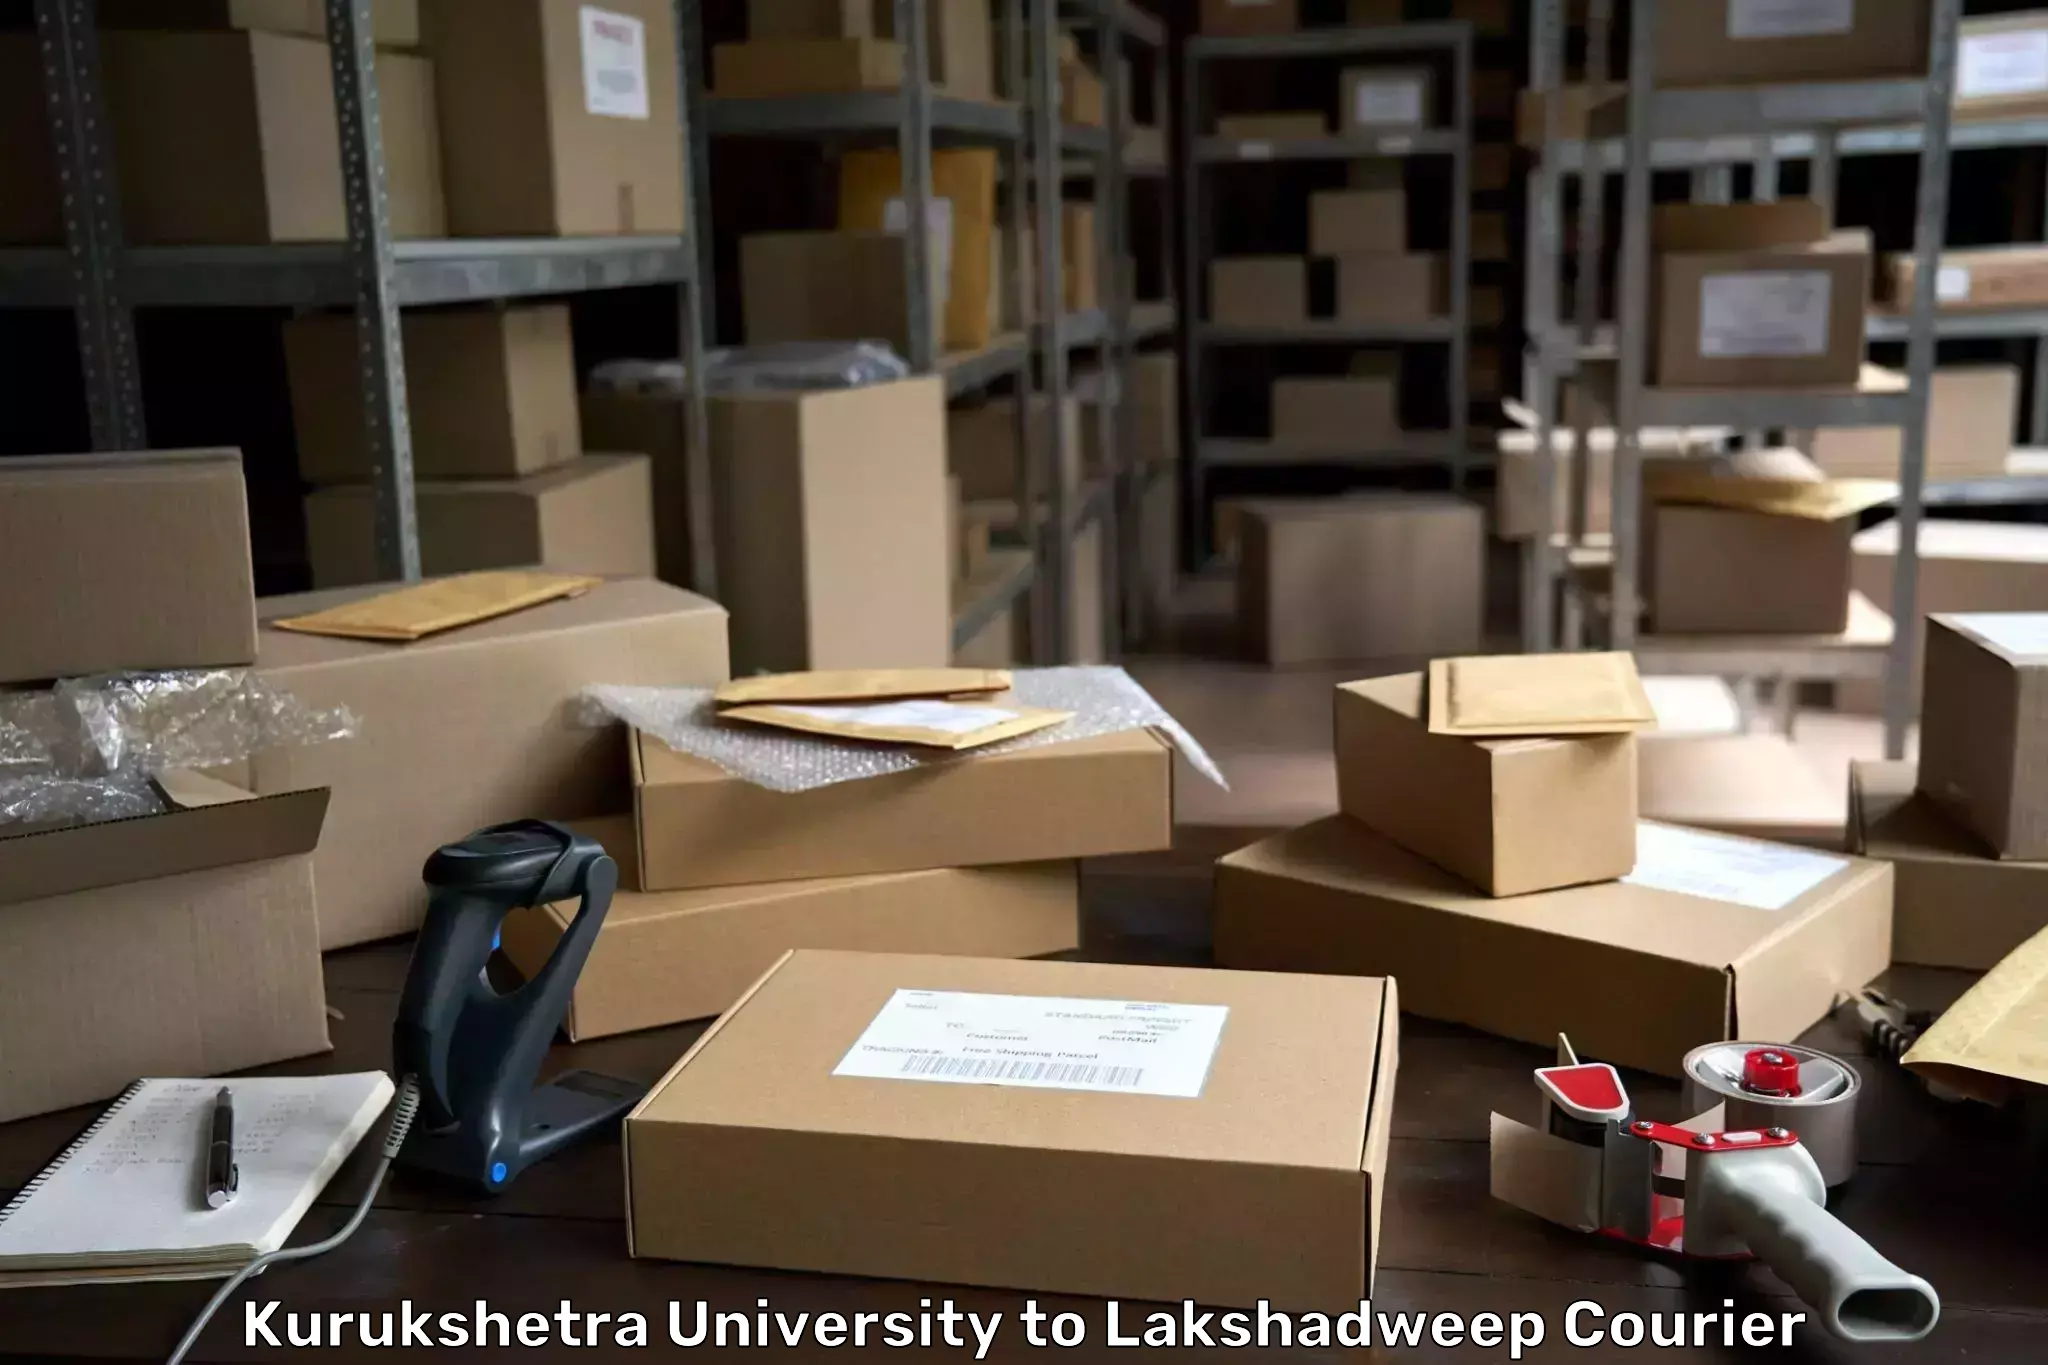 Express delivery capabilities Kurukshetra University to Lakshadweep